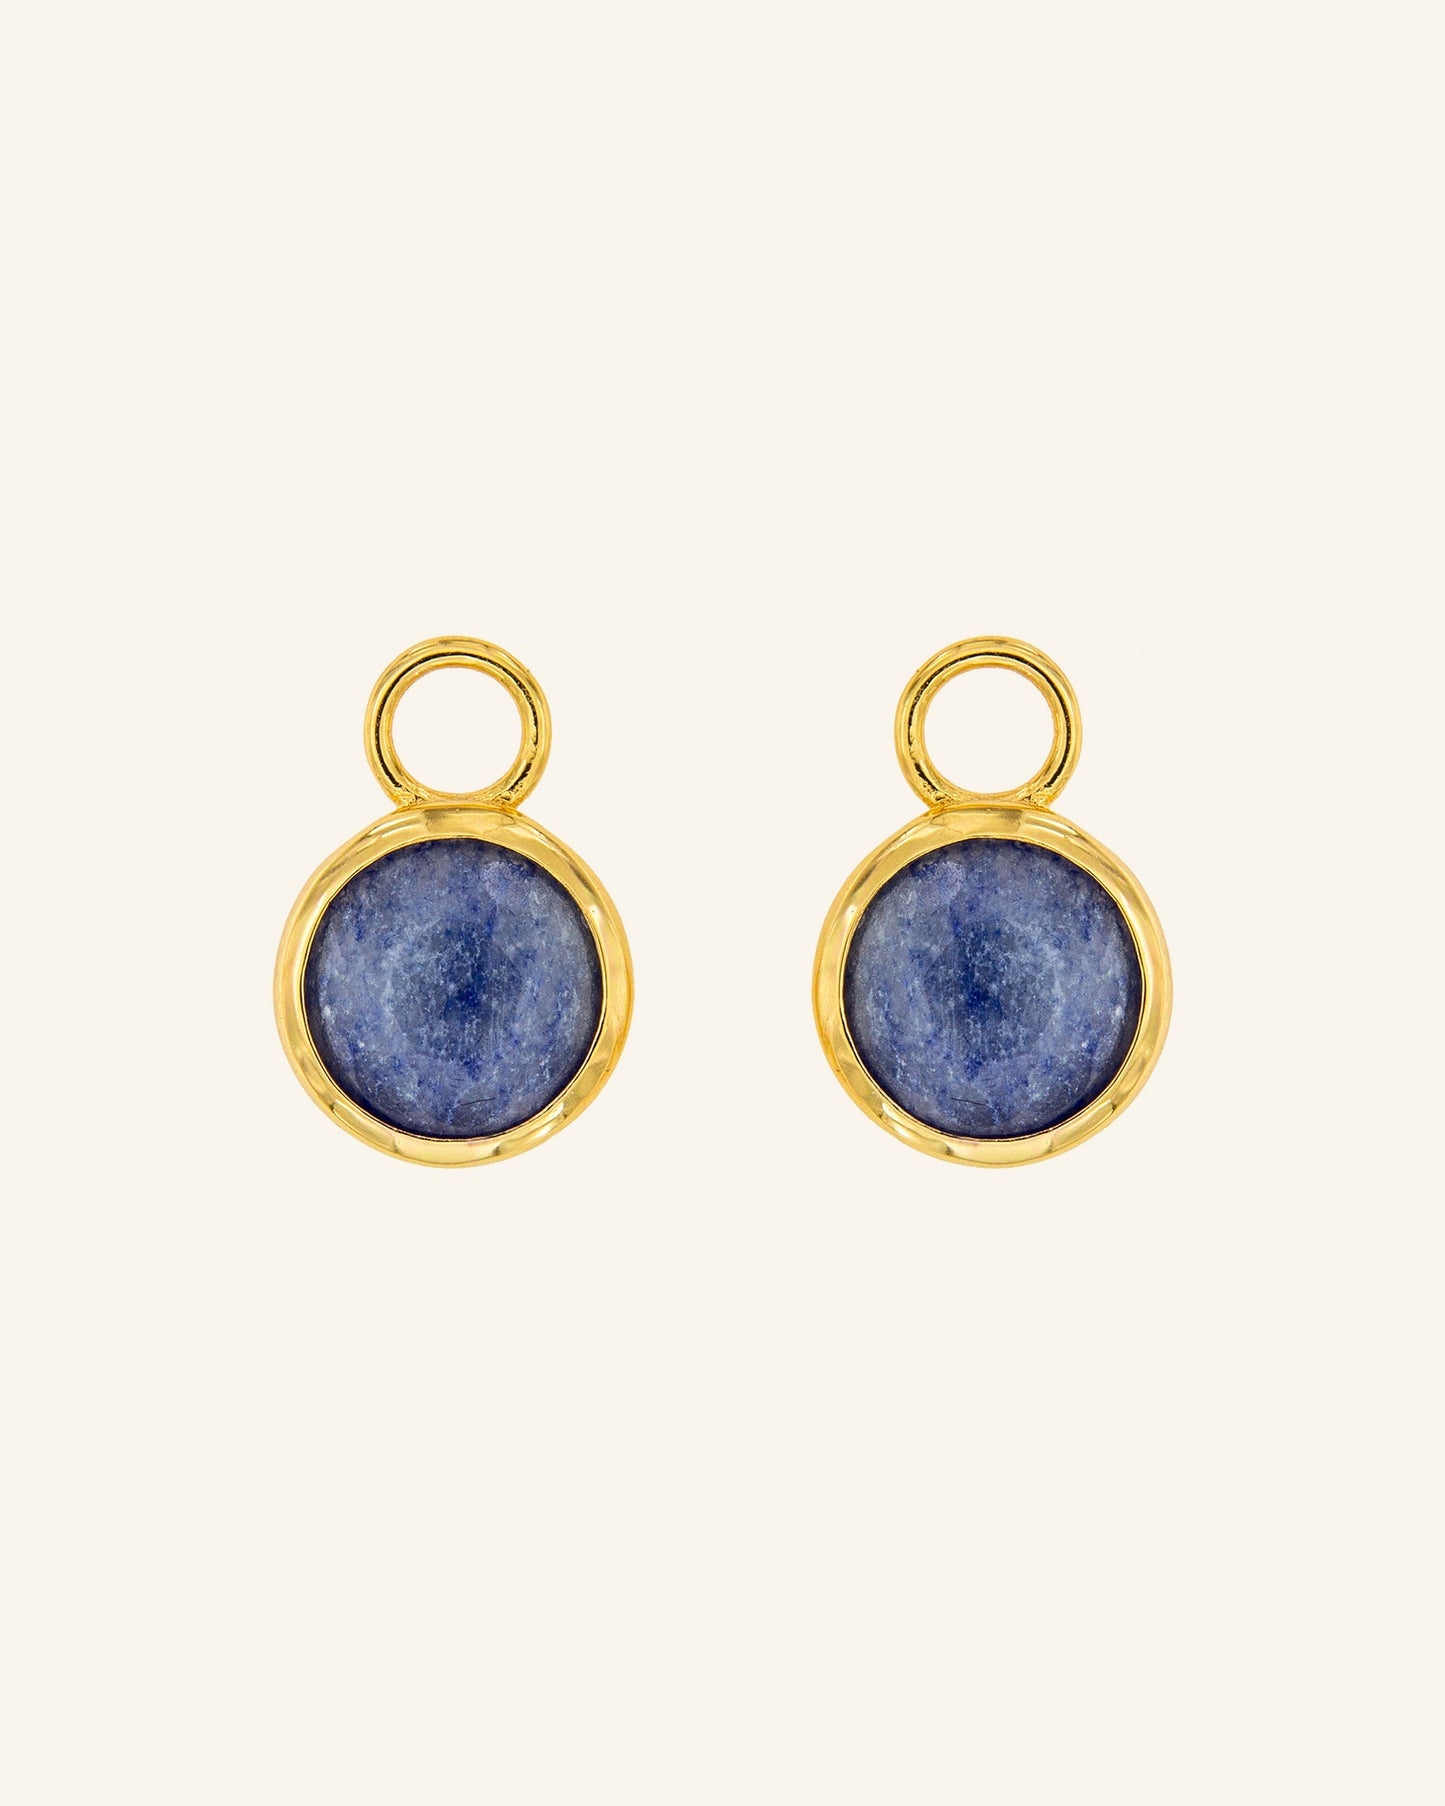 Pluvia pendants with blue quartz